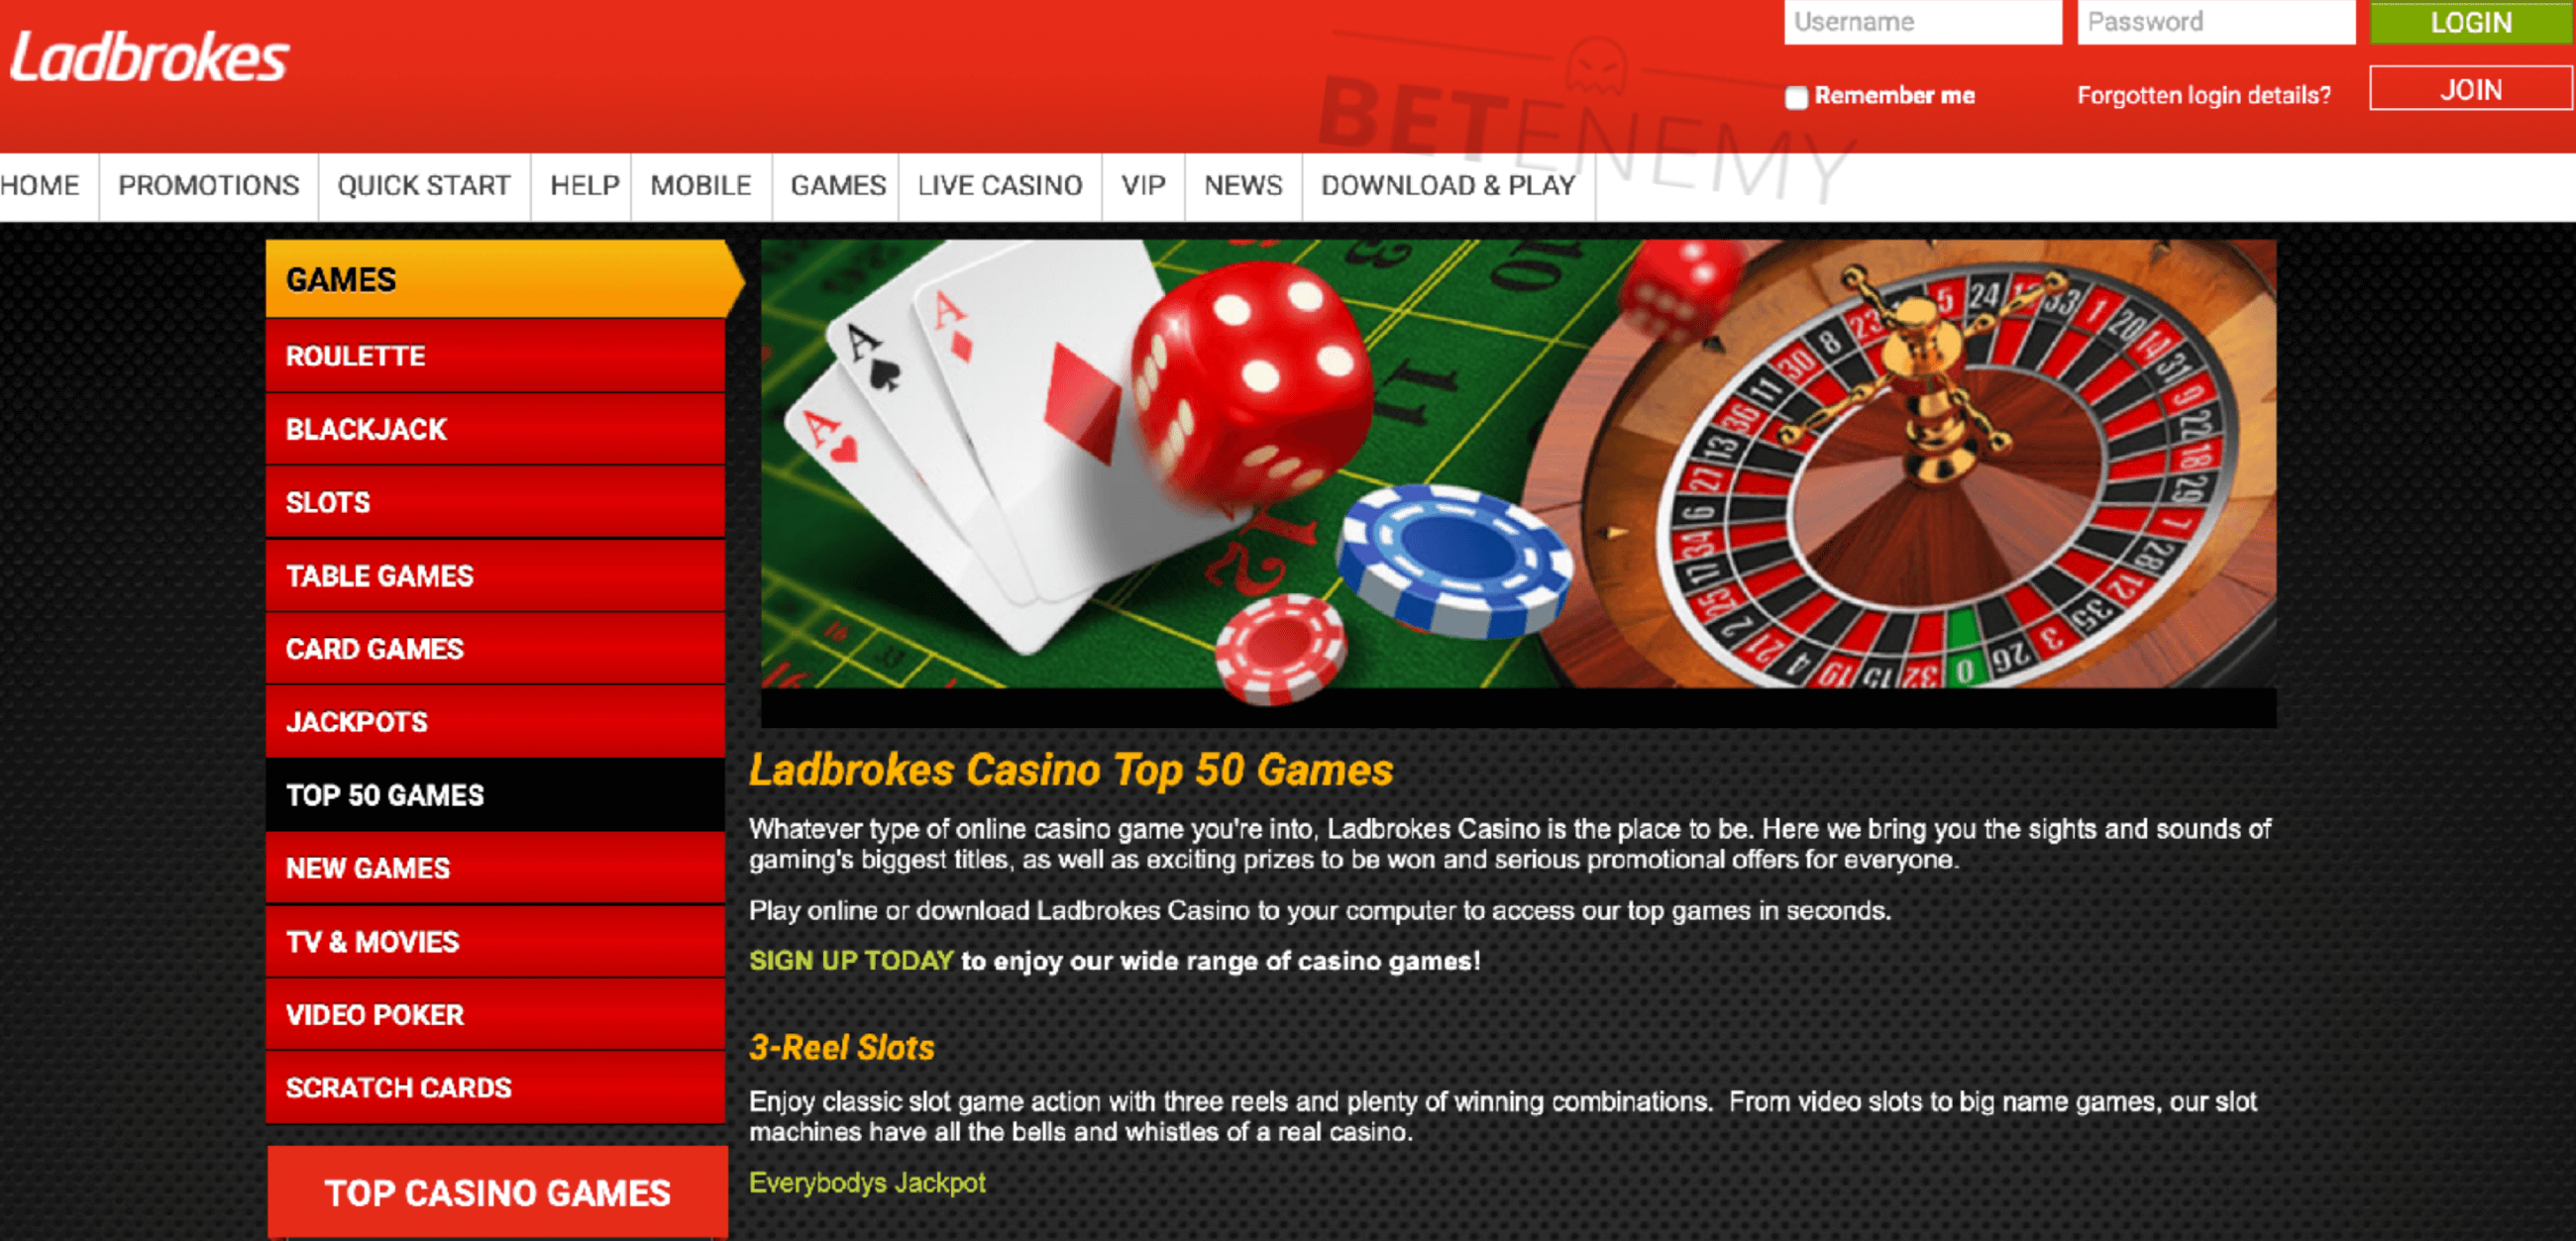 7k 7k kasino website